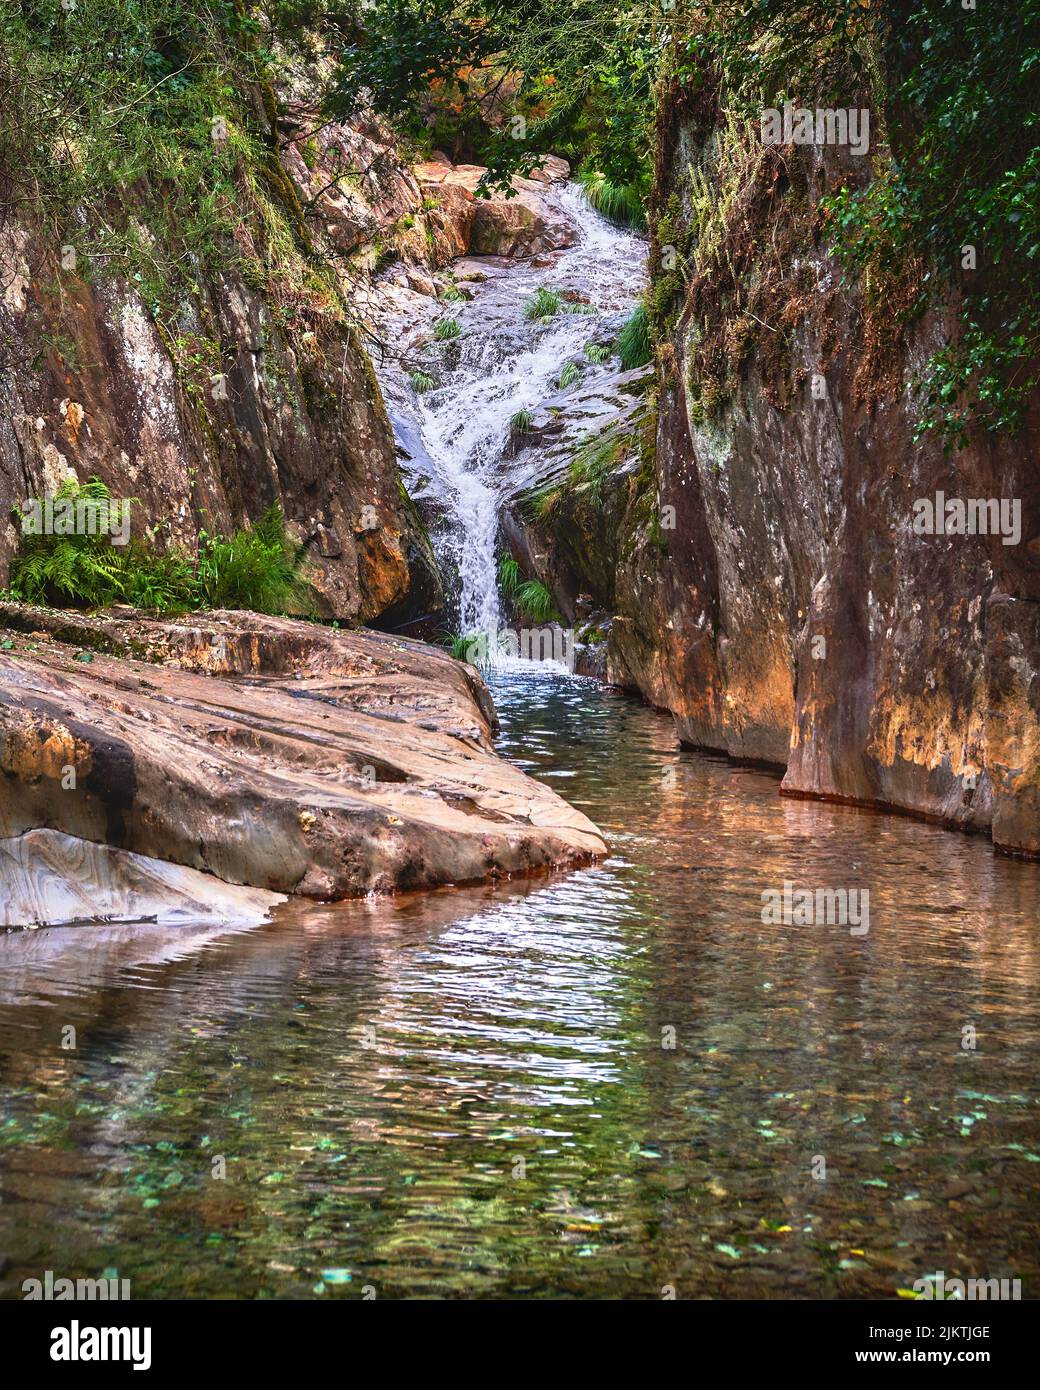 Ein Paiva Fluss Nebenfluss Wald Natur Wandern Gesundheit Wildnis Landschaft Lifestyle Wasserfall Arouca PT Stockfoto